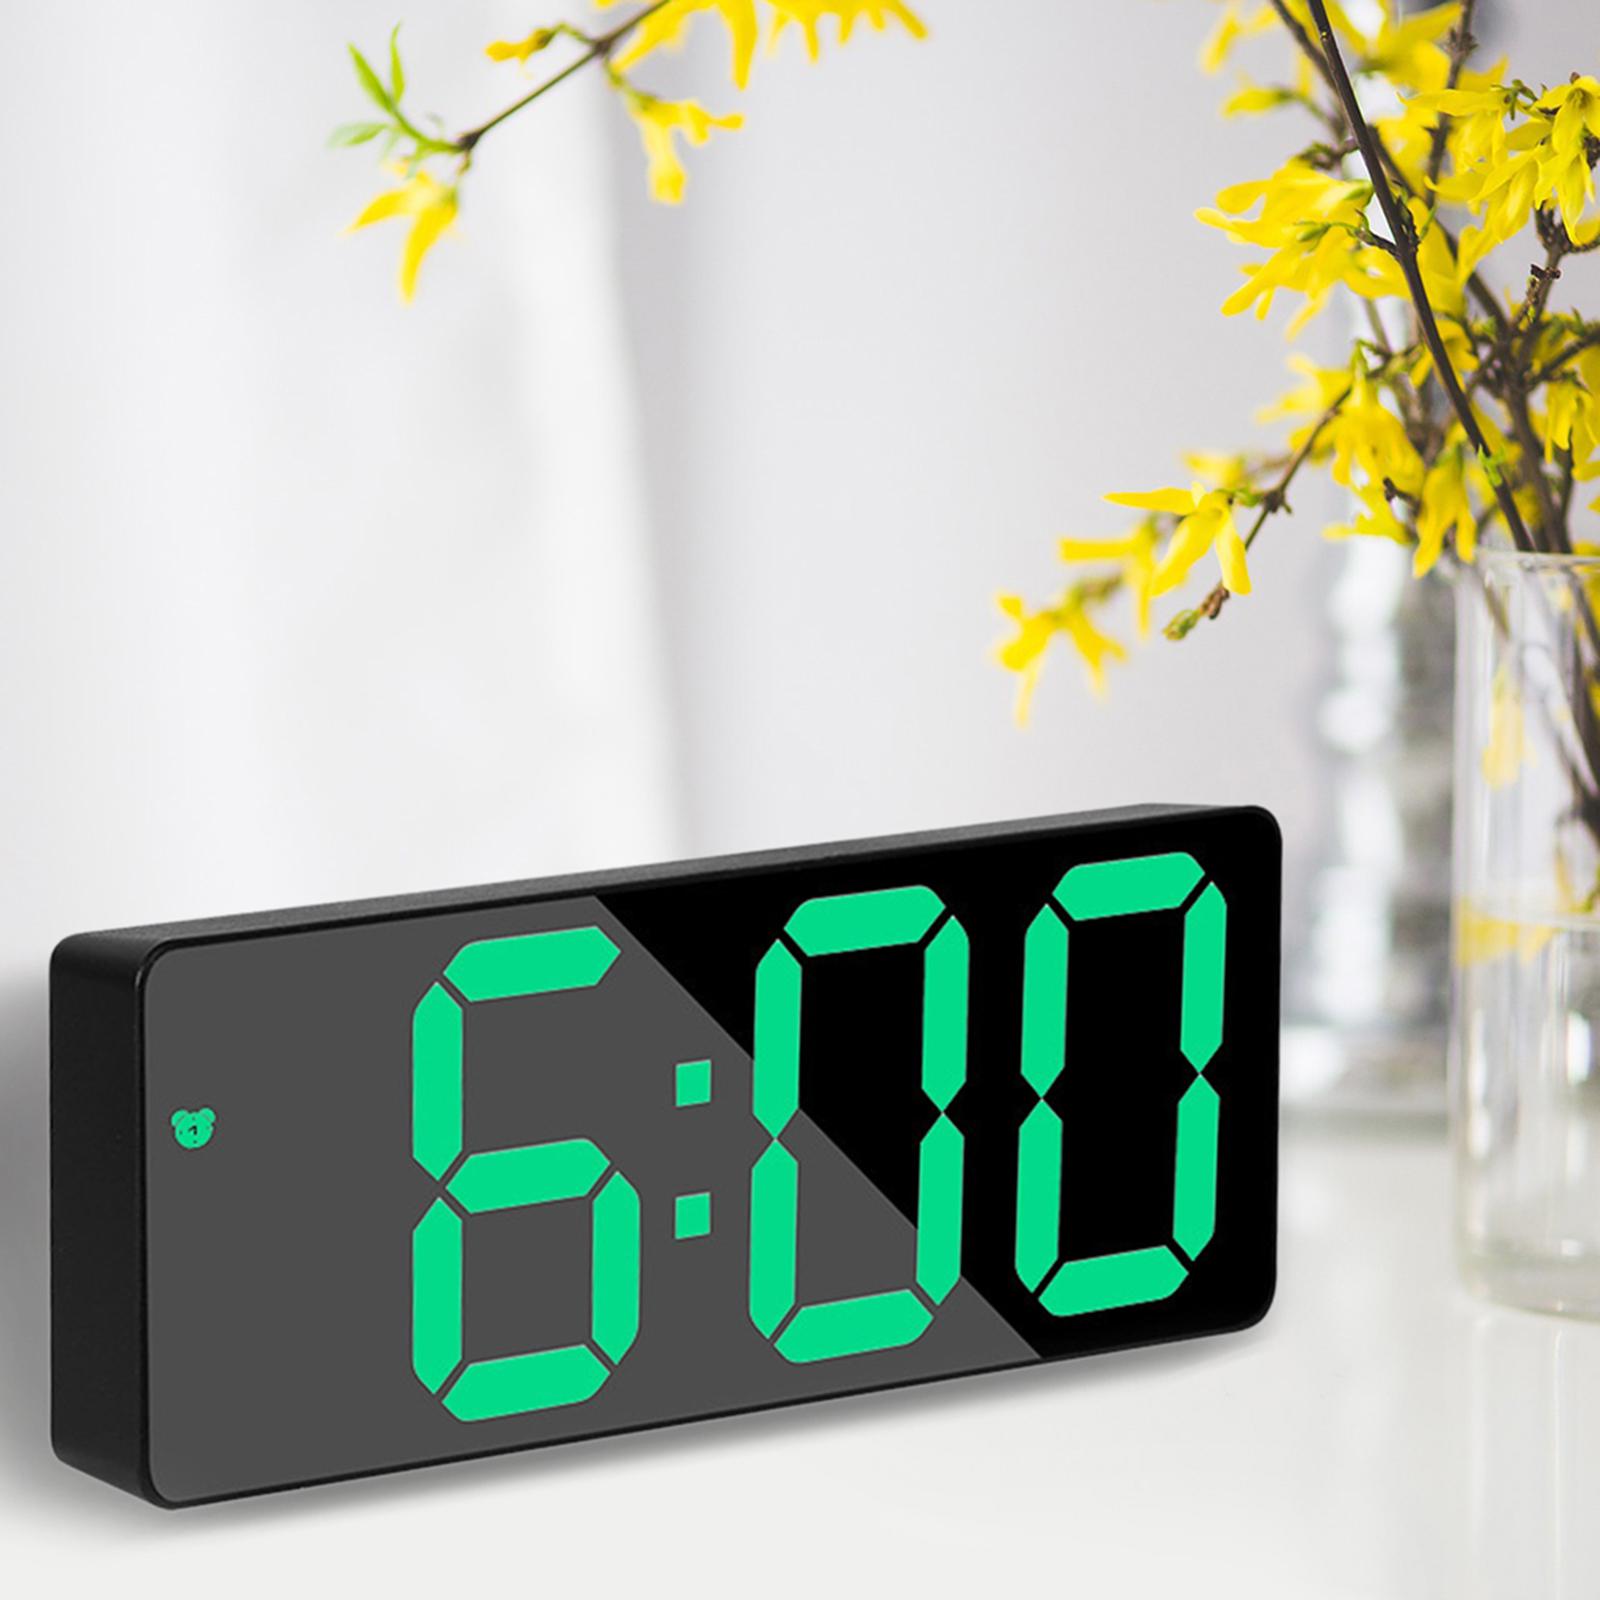 Alarm Clock Snooze Large Display Electronic Desktop Black face green